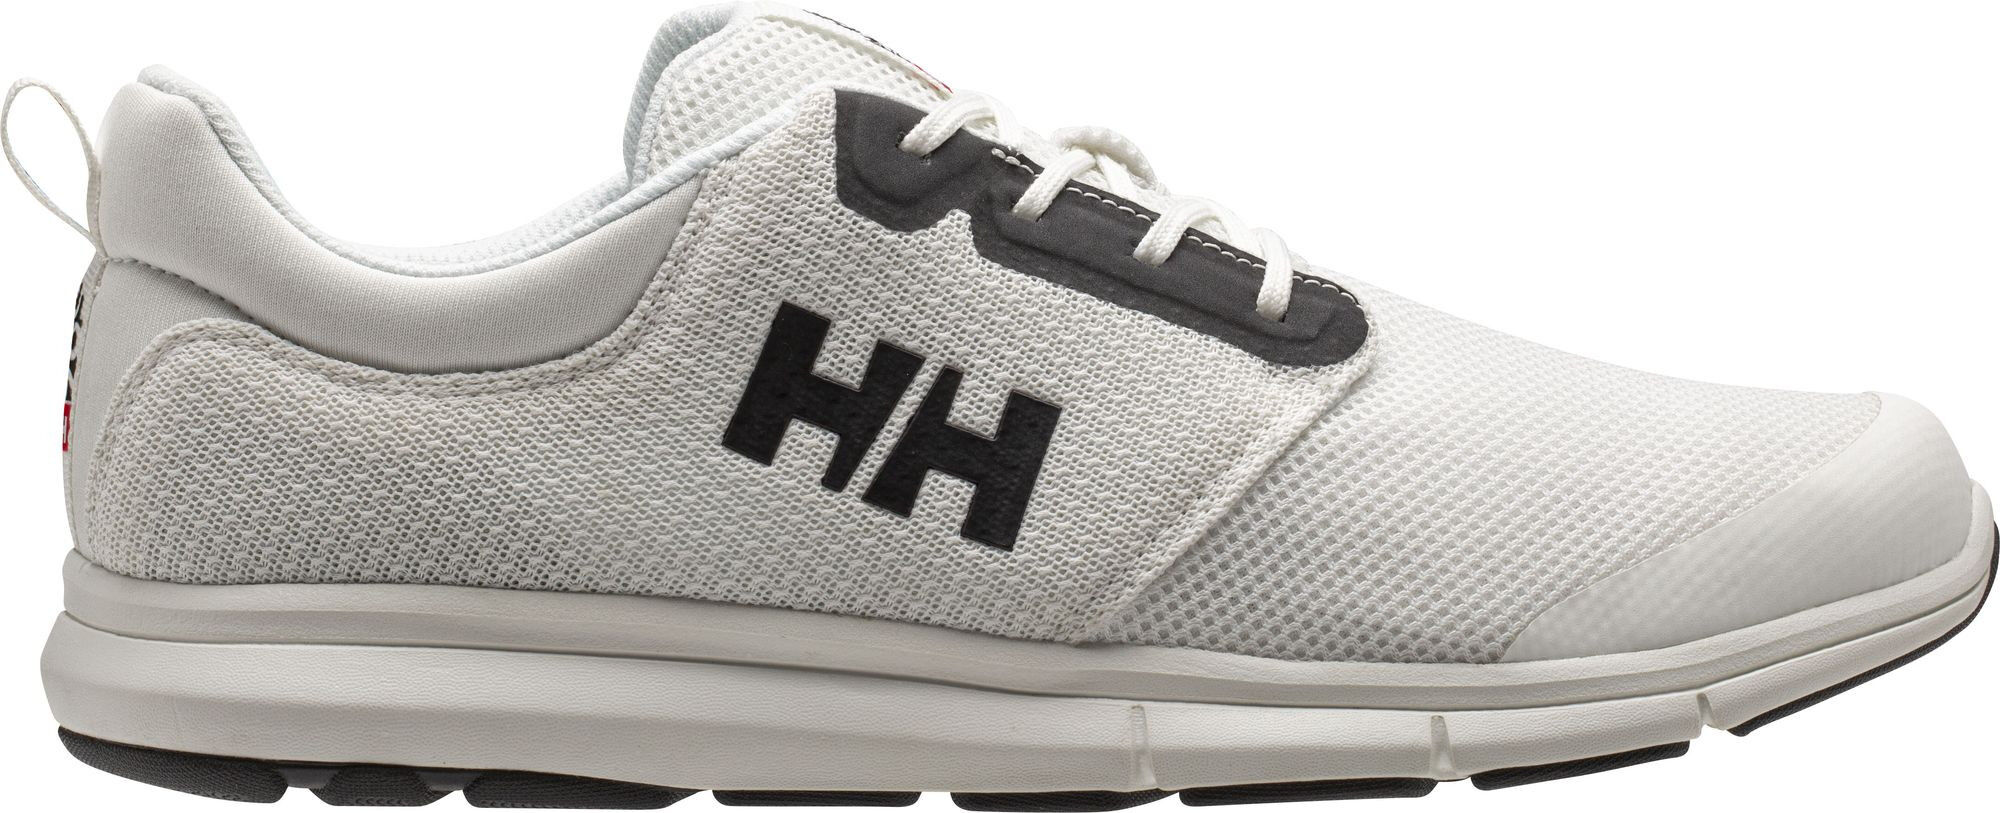 Helly Hansen Feathering - Pánské jachtařské boty & obuv | Hardloop